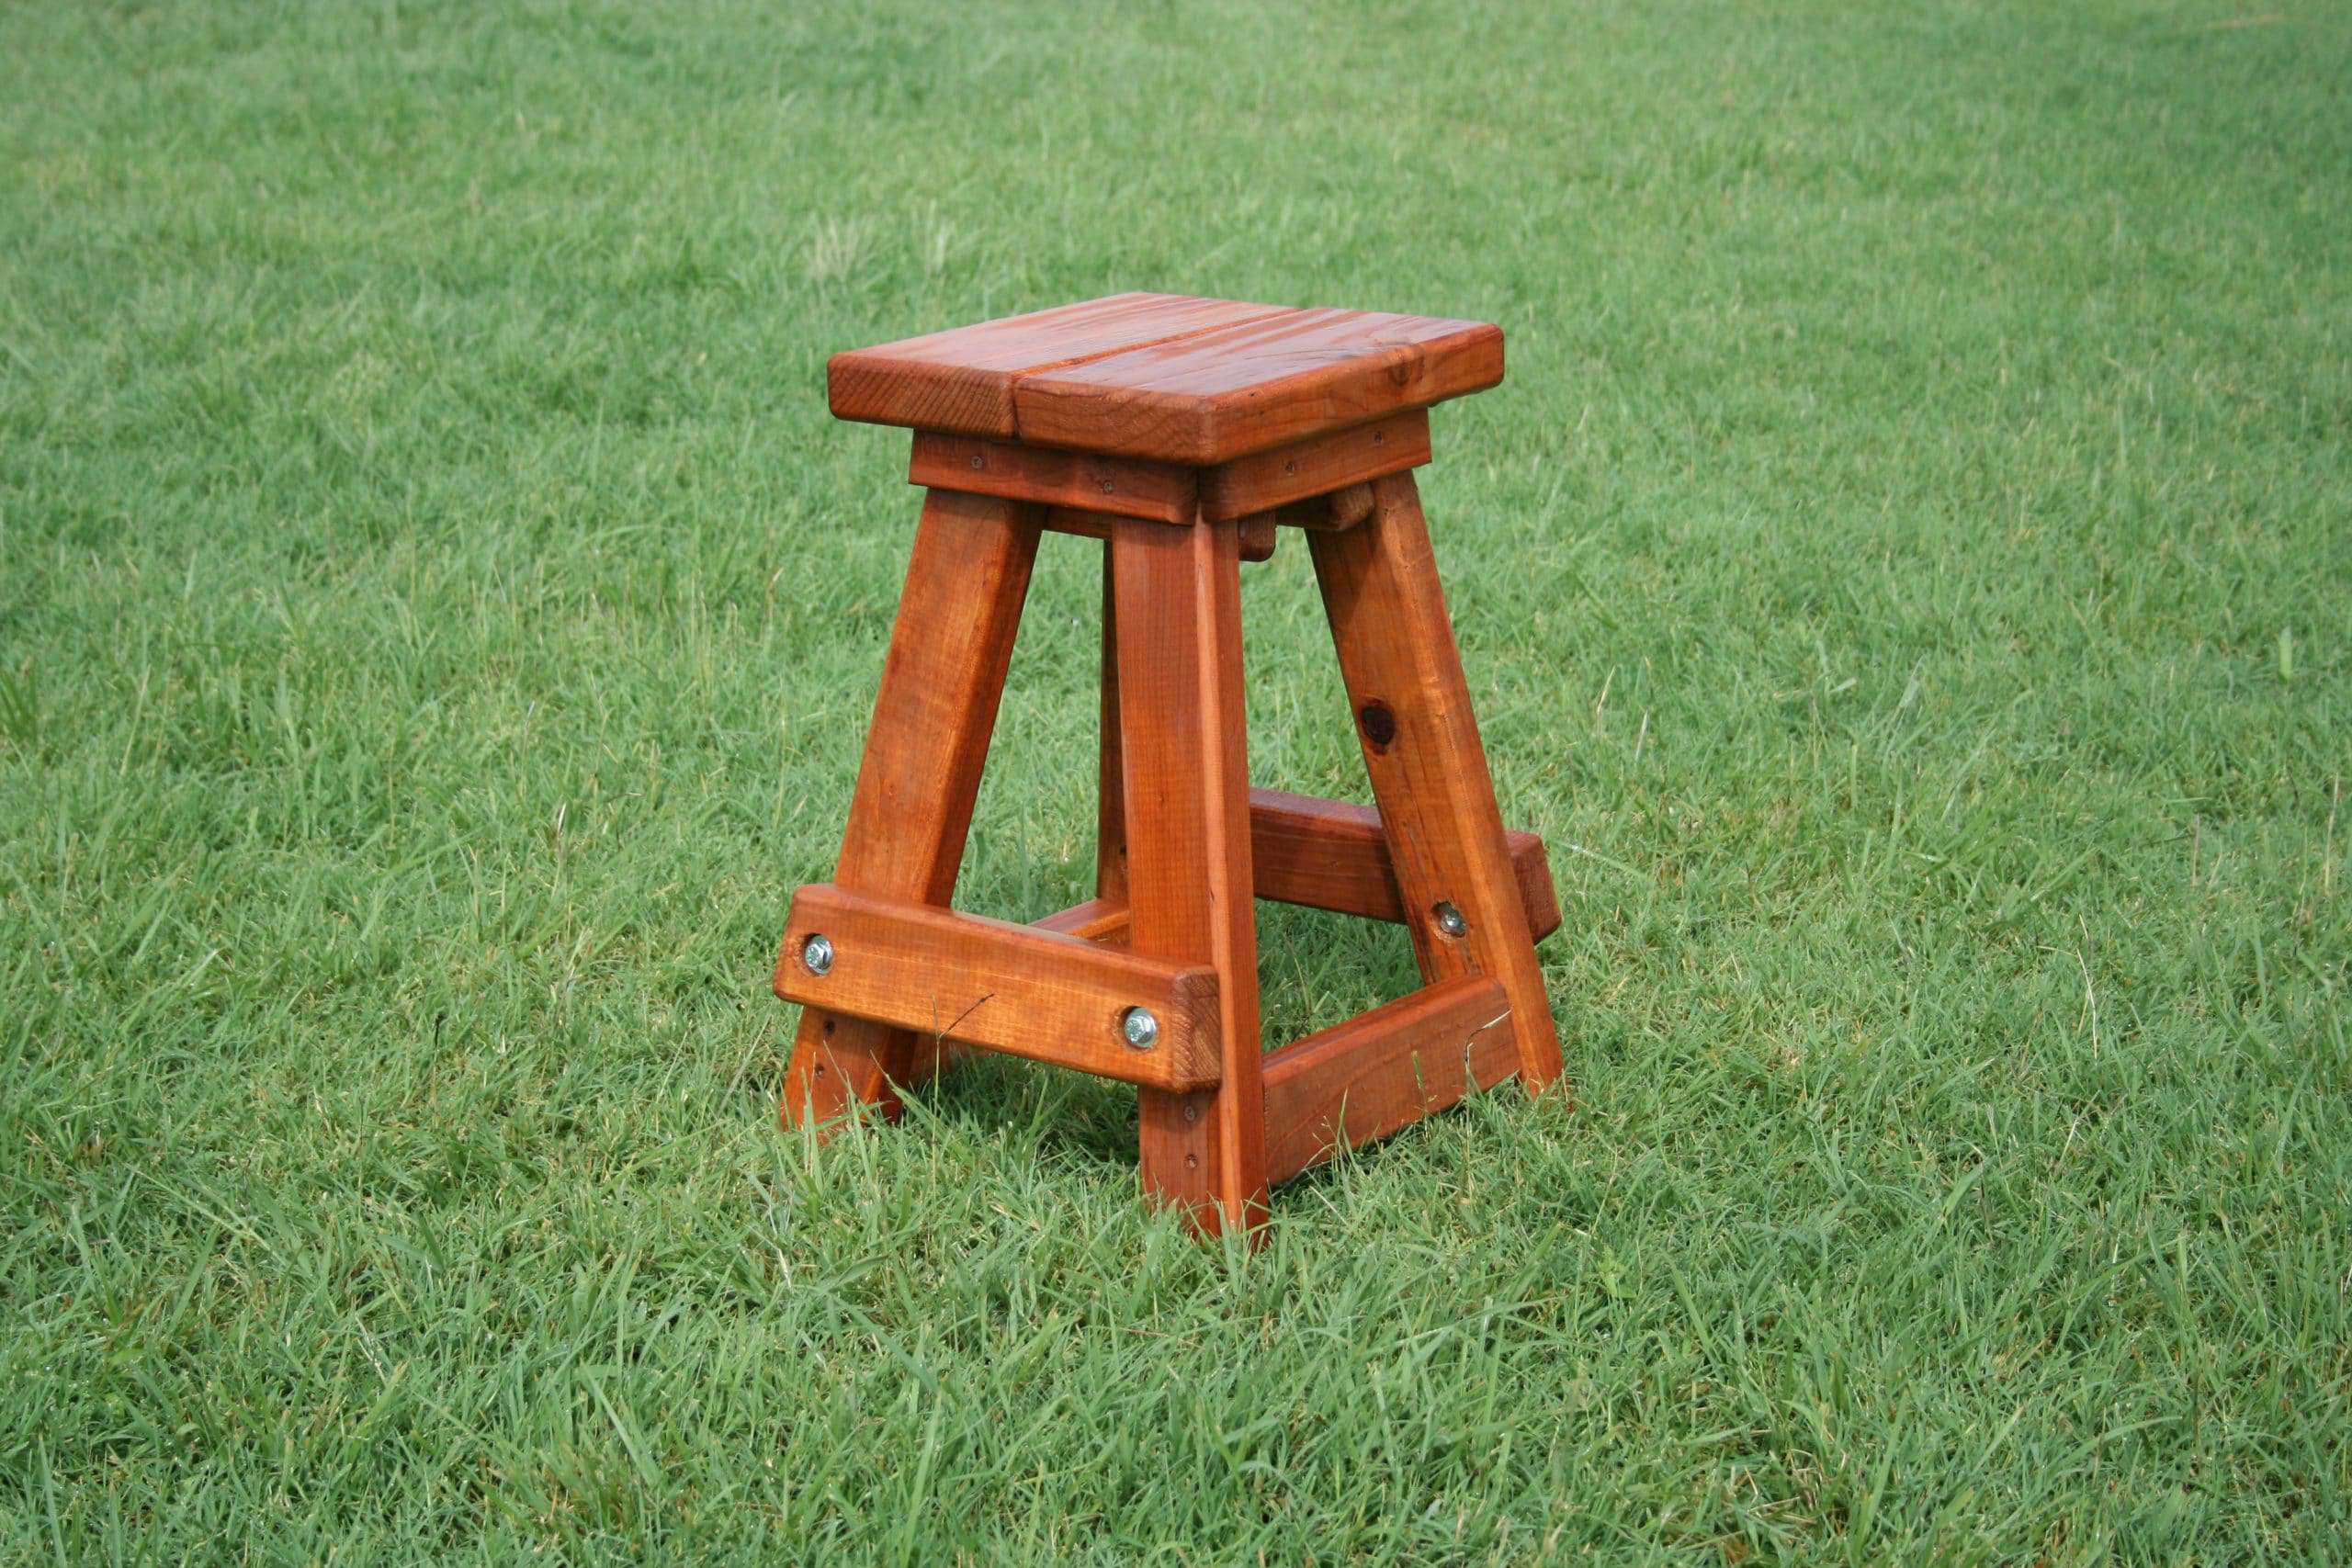 kids redwood stool is sitting on green grass